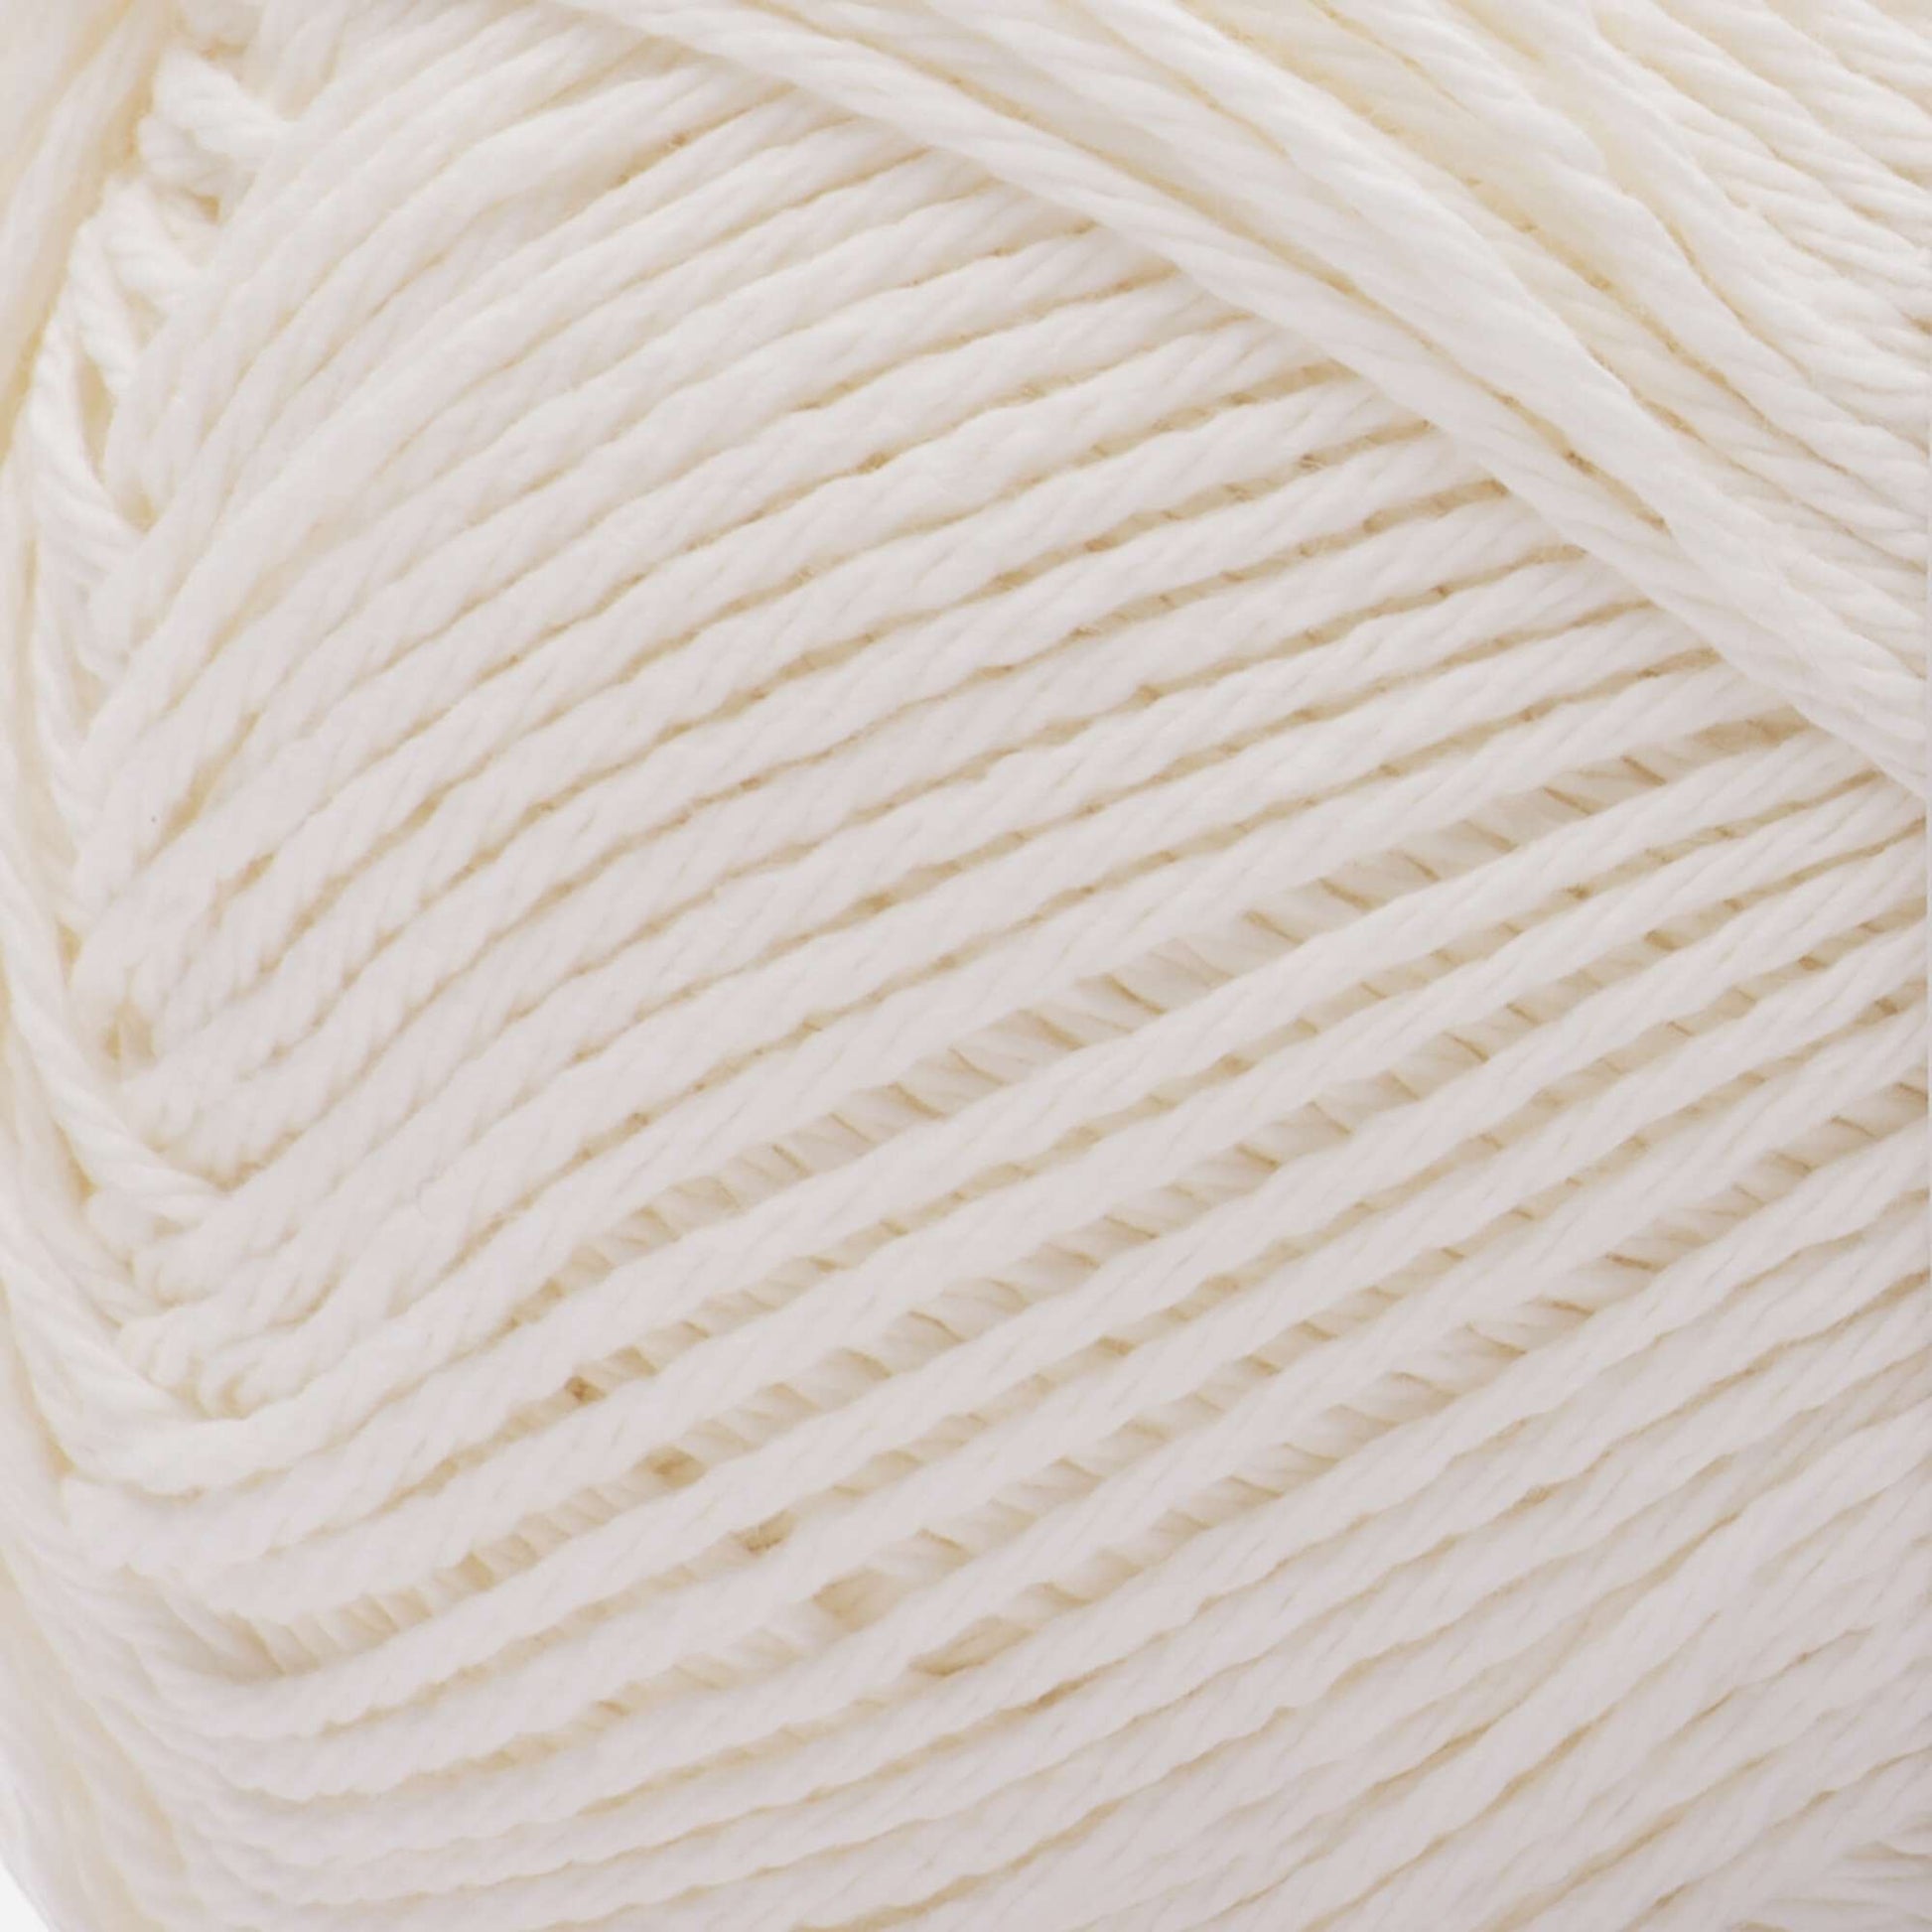 Bernat Handicrafter Cotton Yarn (400g/14oz) - Discontinued Shades Soft Cream